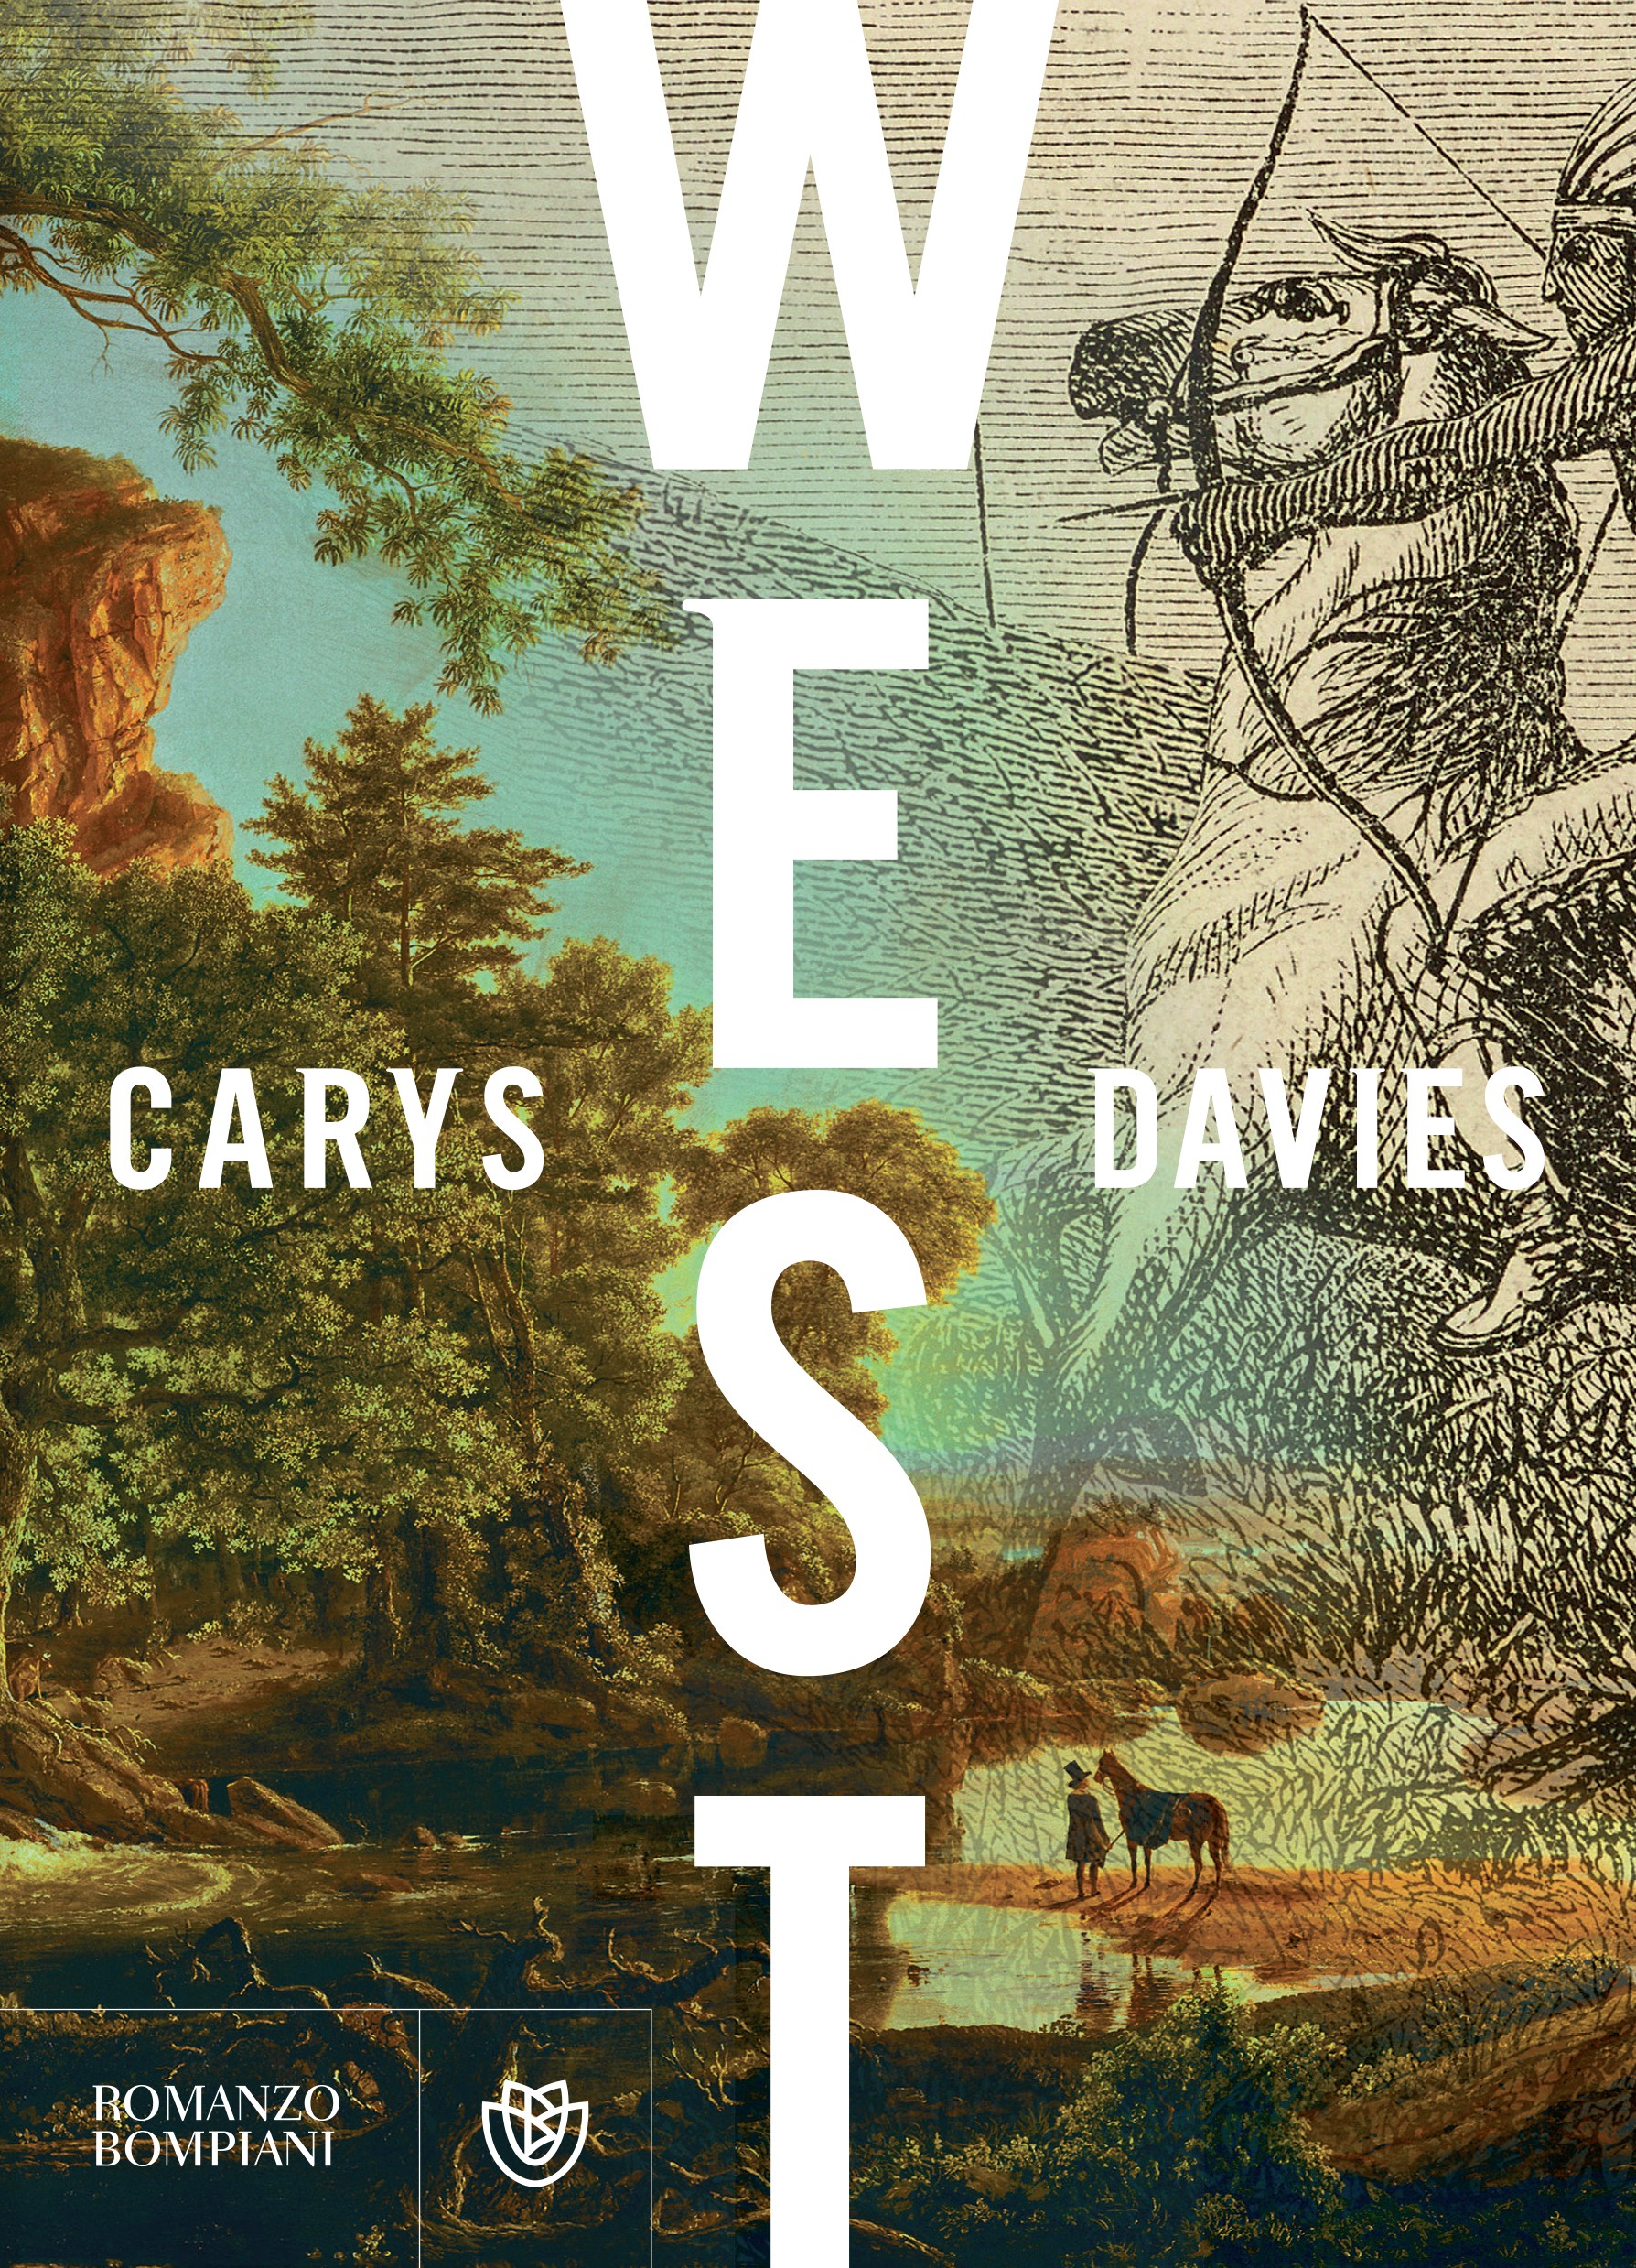 West (edizione italiana) - Librerie.coop